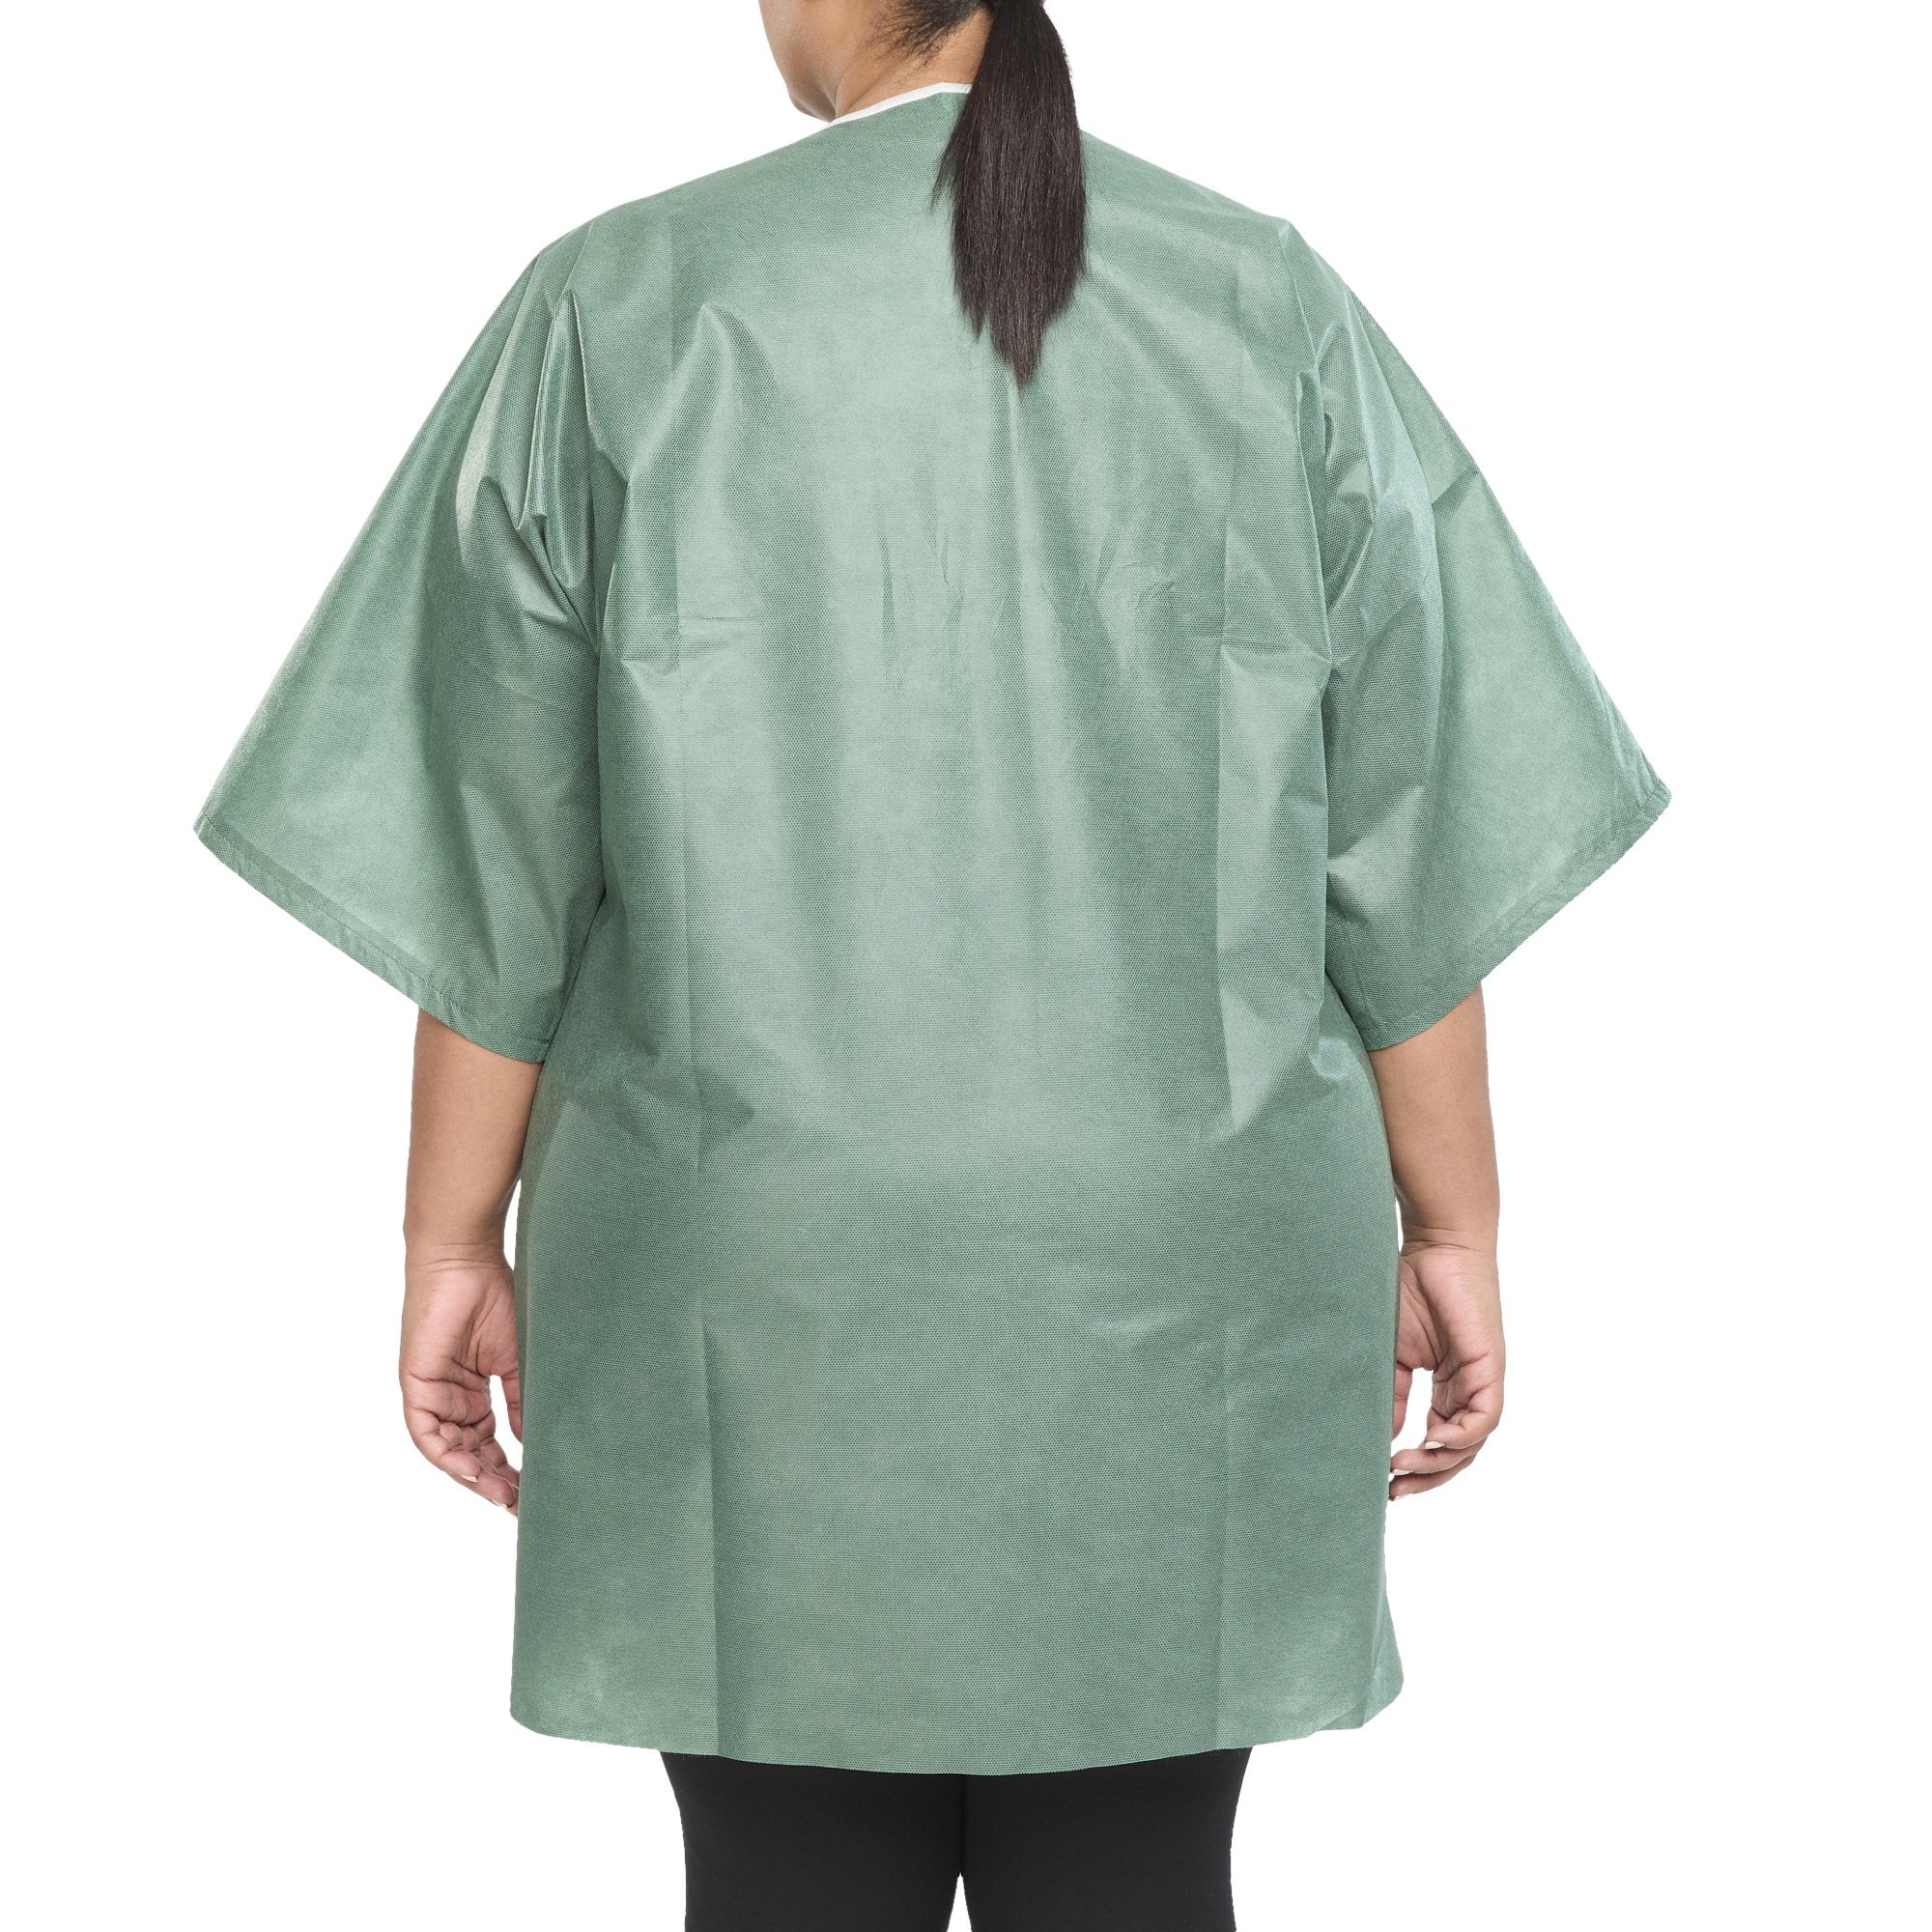 Graham Medical Scrub Shirt Without Pockets Short Sleeve, 3X-Large Green -Case of 30